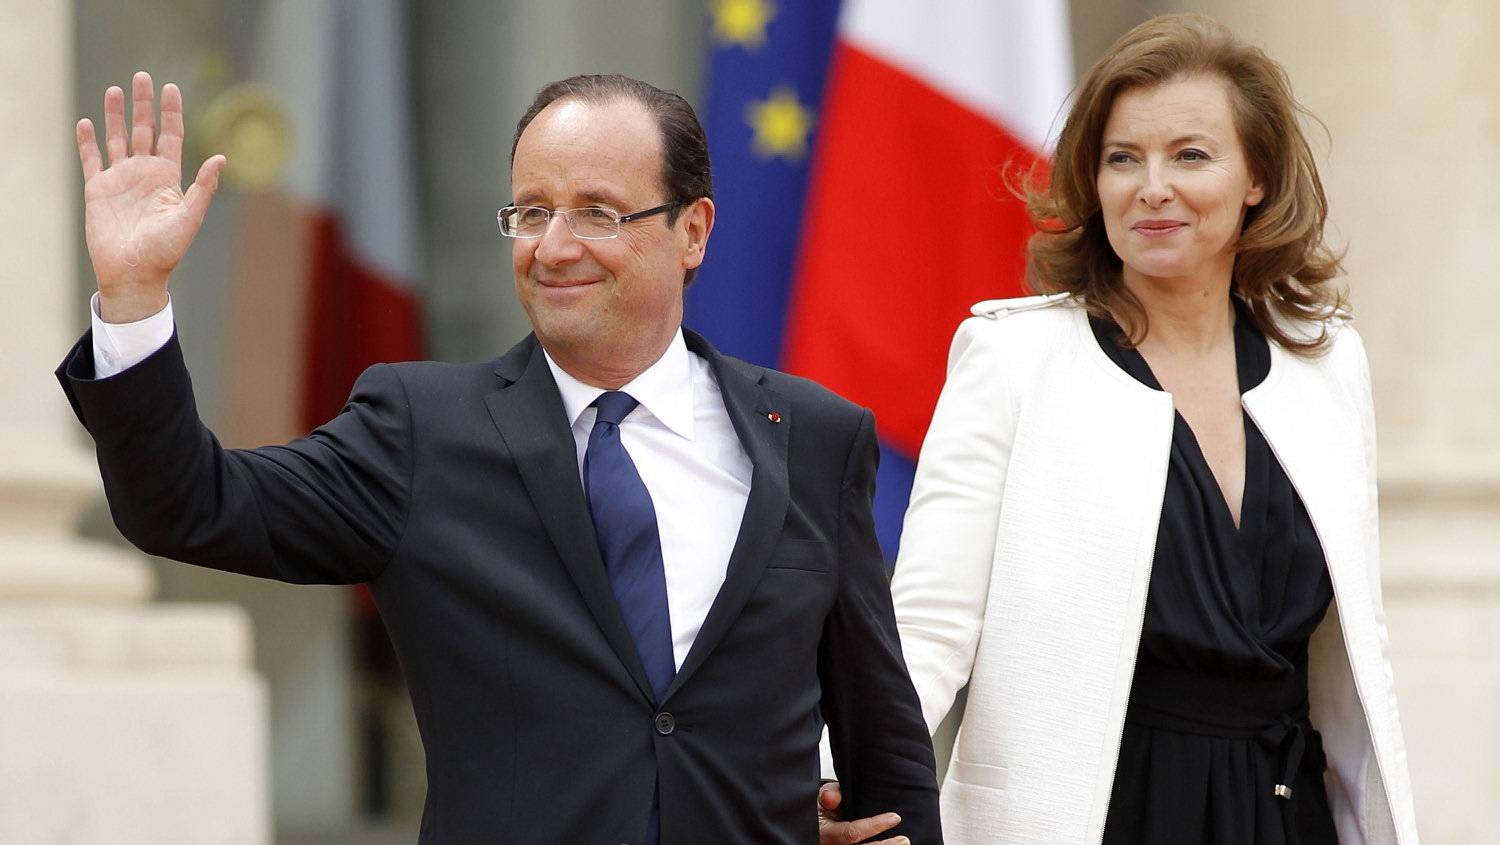 French President Francois Hollande and Valerie Trierweiler visit